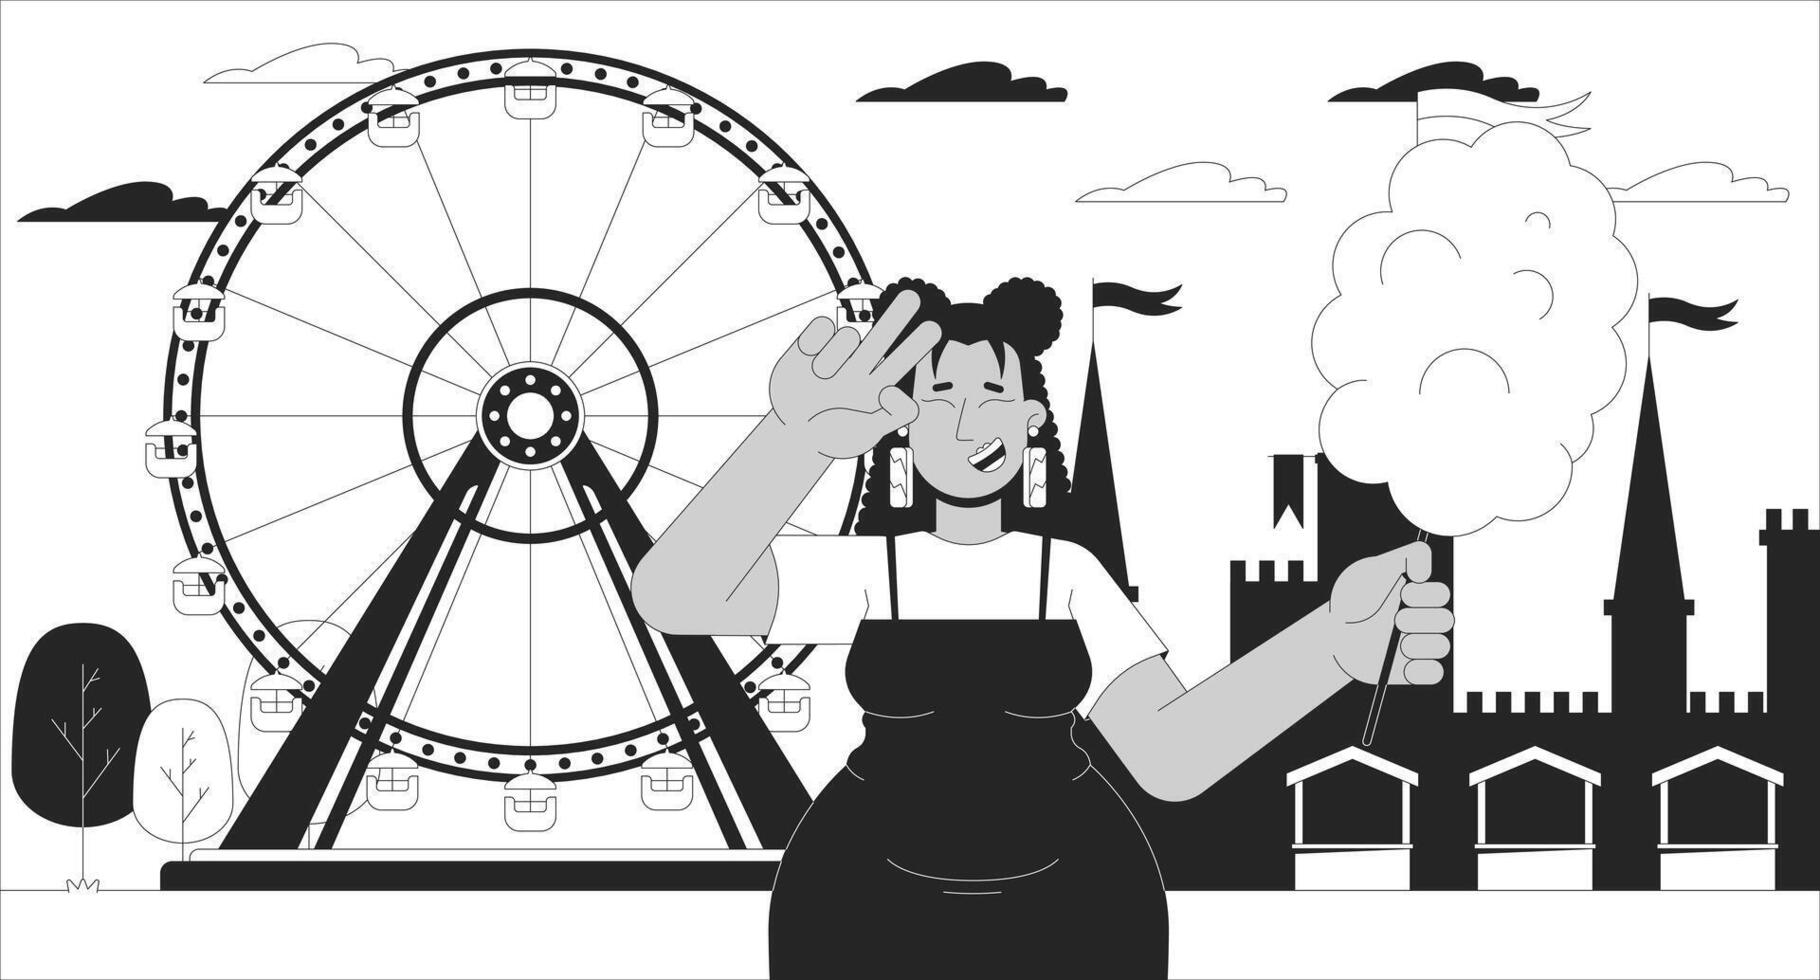 Plus sized latina woman visiting amusement park cartoon flat illustration. Positive curvy female holding cotton candy 2D character monochrome background. Lifestyle scene outline scene image vector